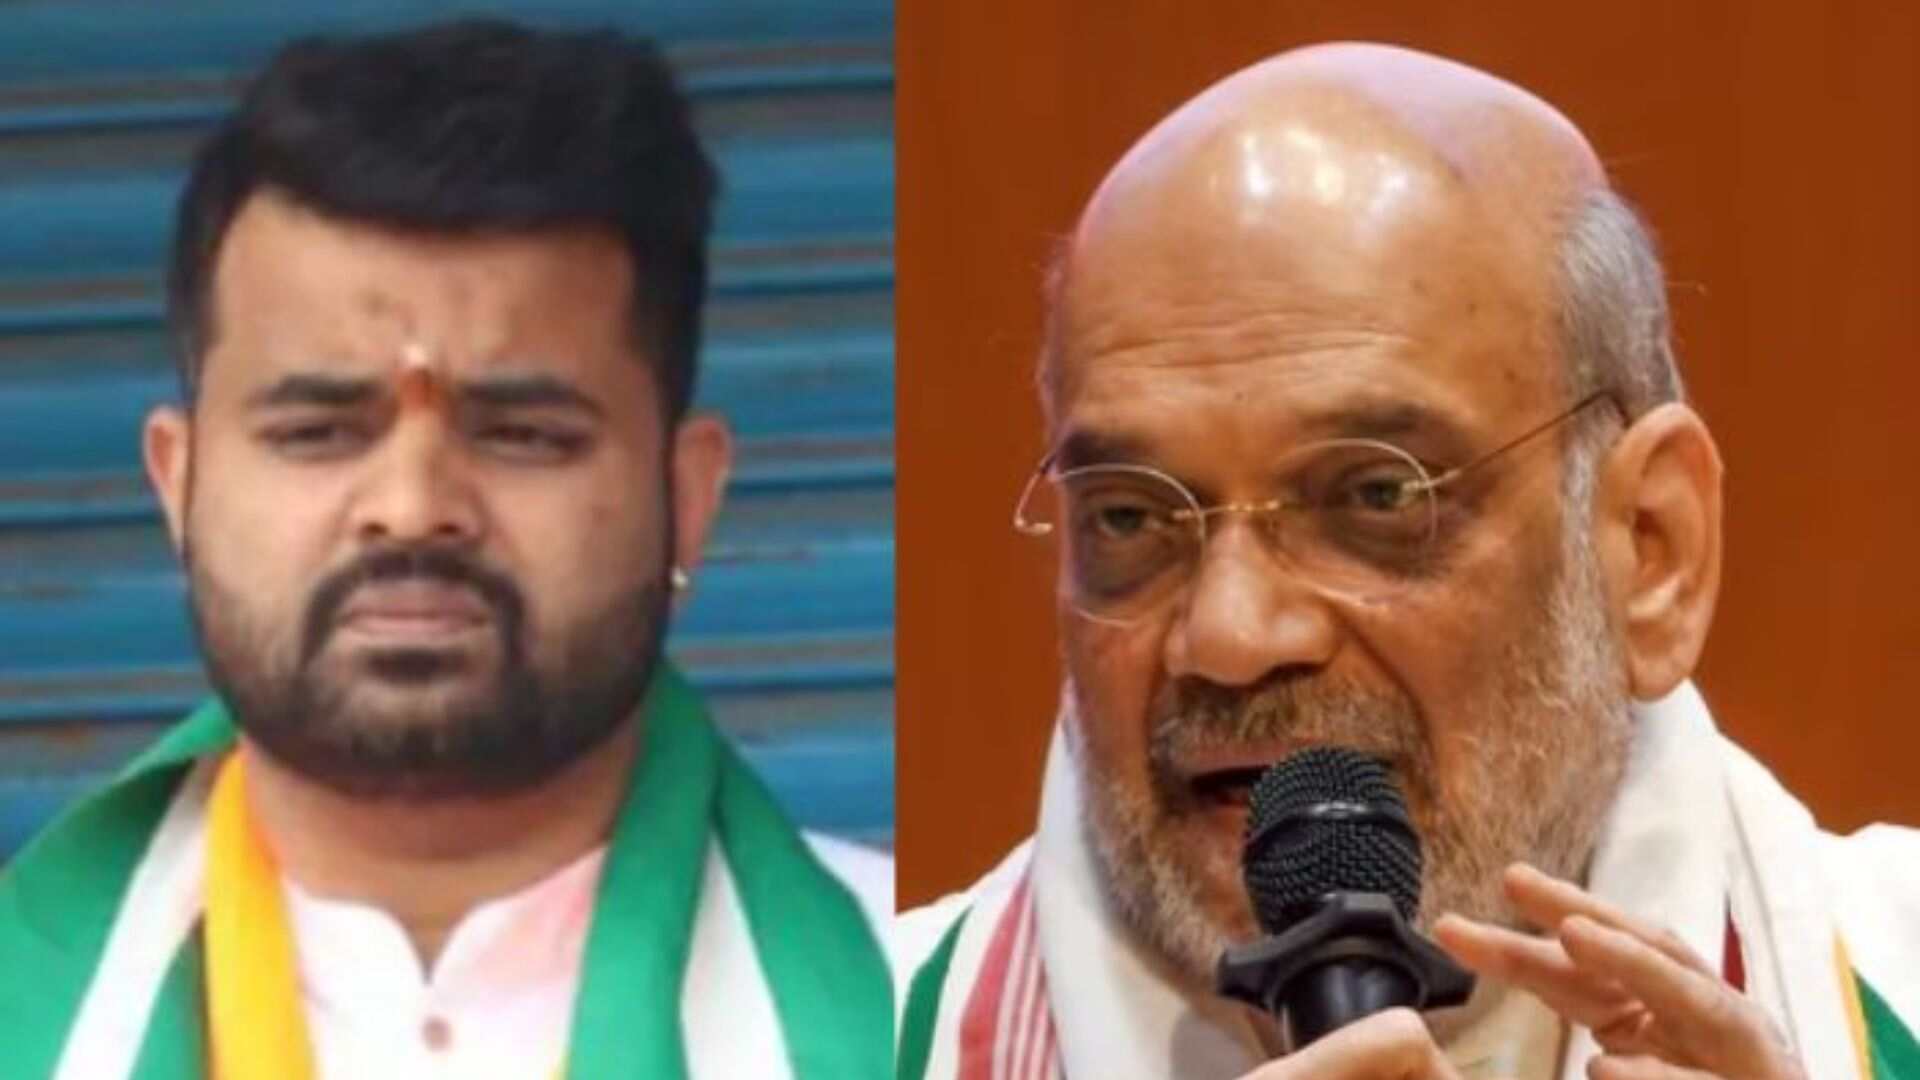 Prajwal Revanna ‘Obscene’ Video Case: Karnataka Deputy CM Shivakumar Urges Amit Shah to Visit Alleged Video Victims